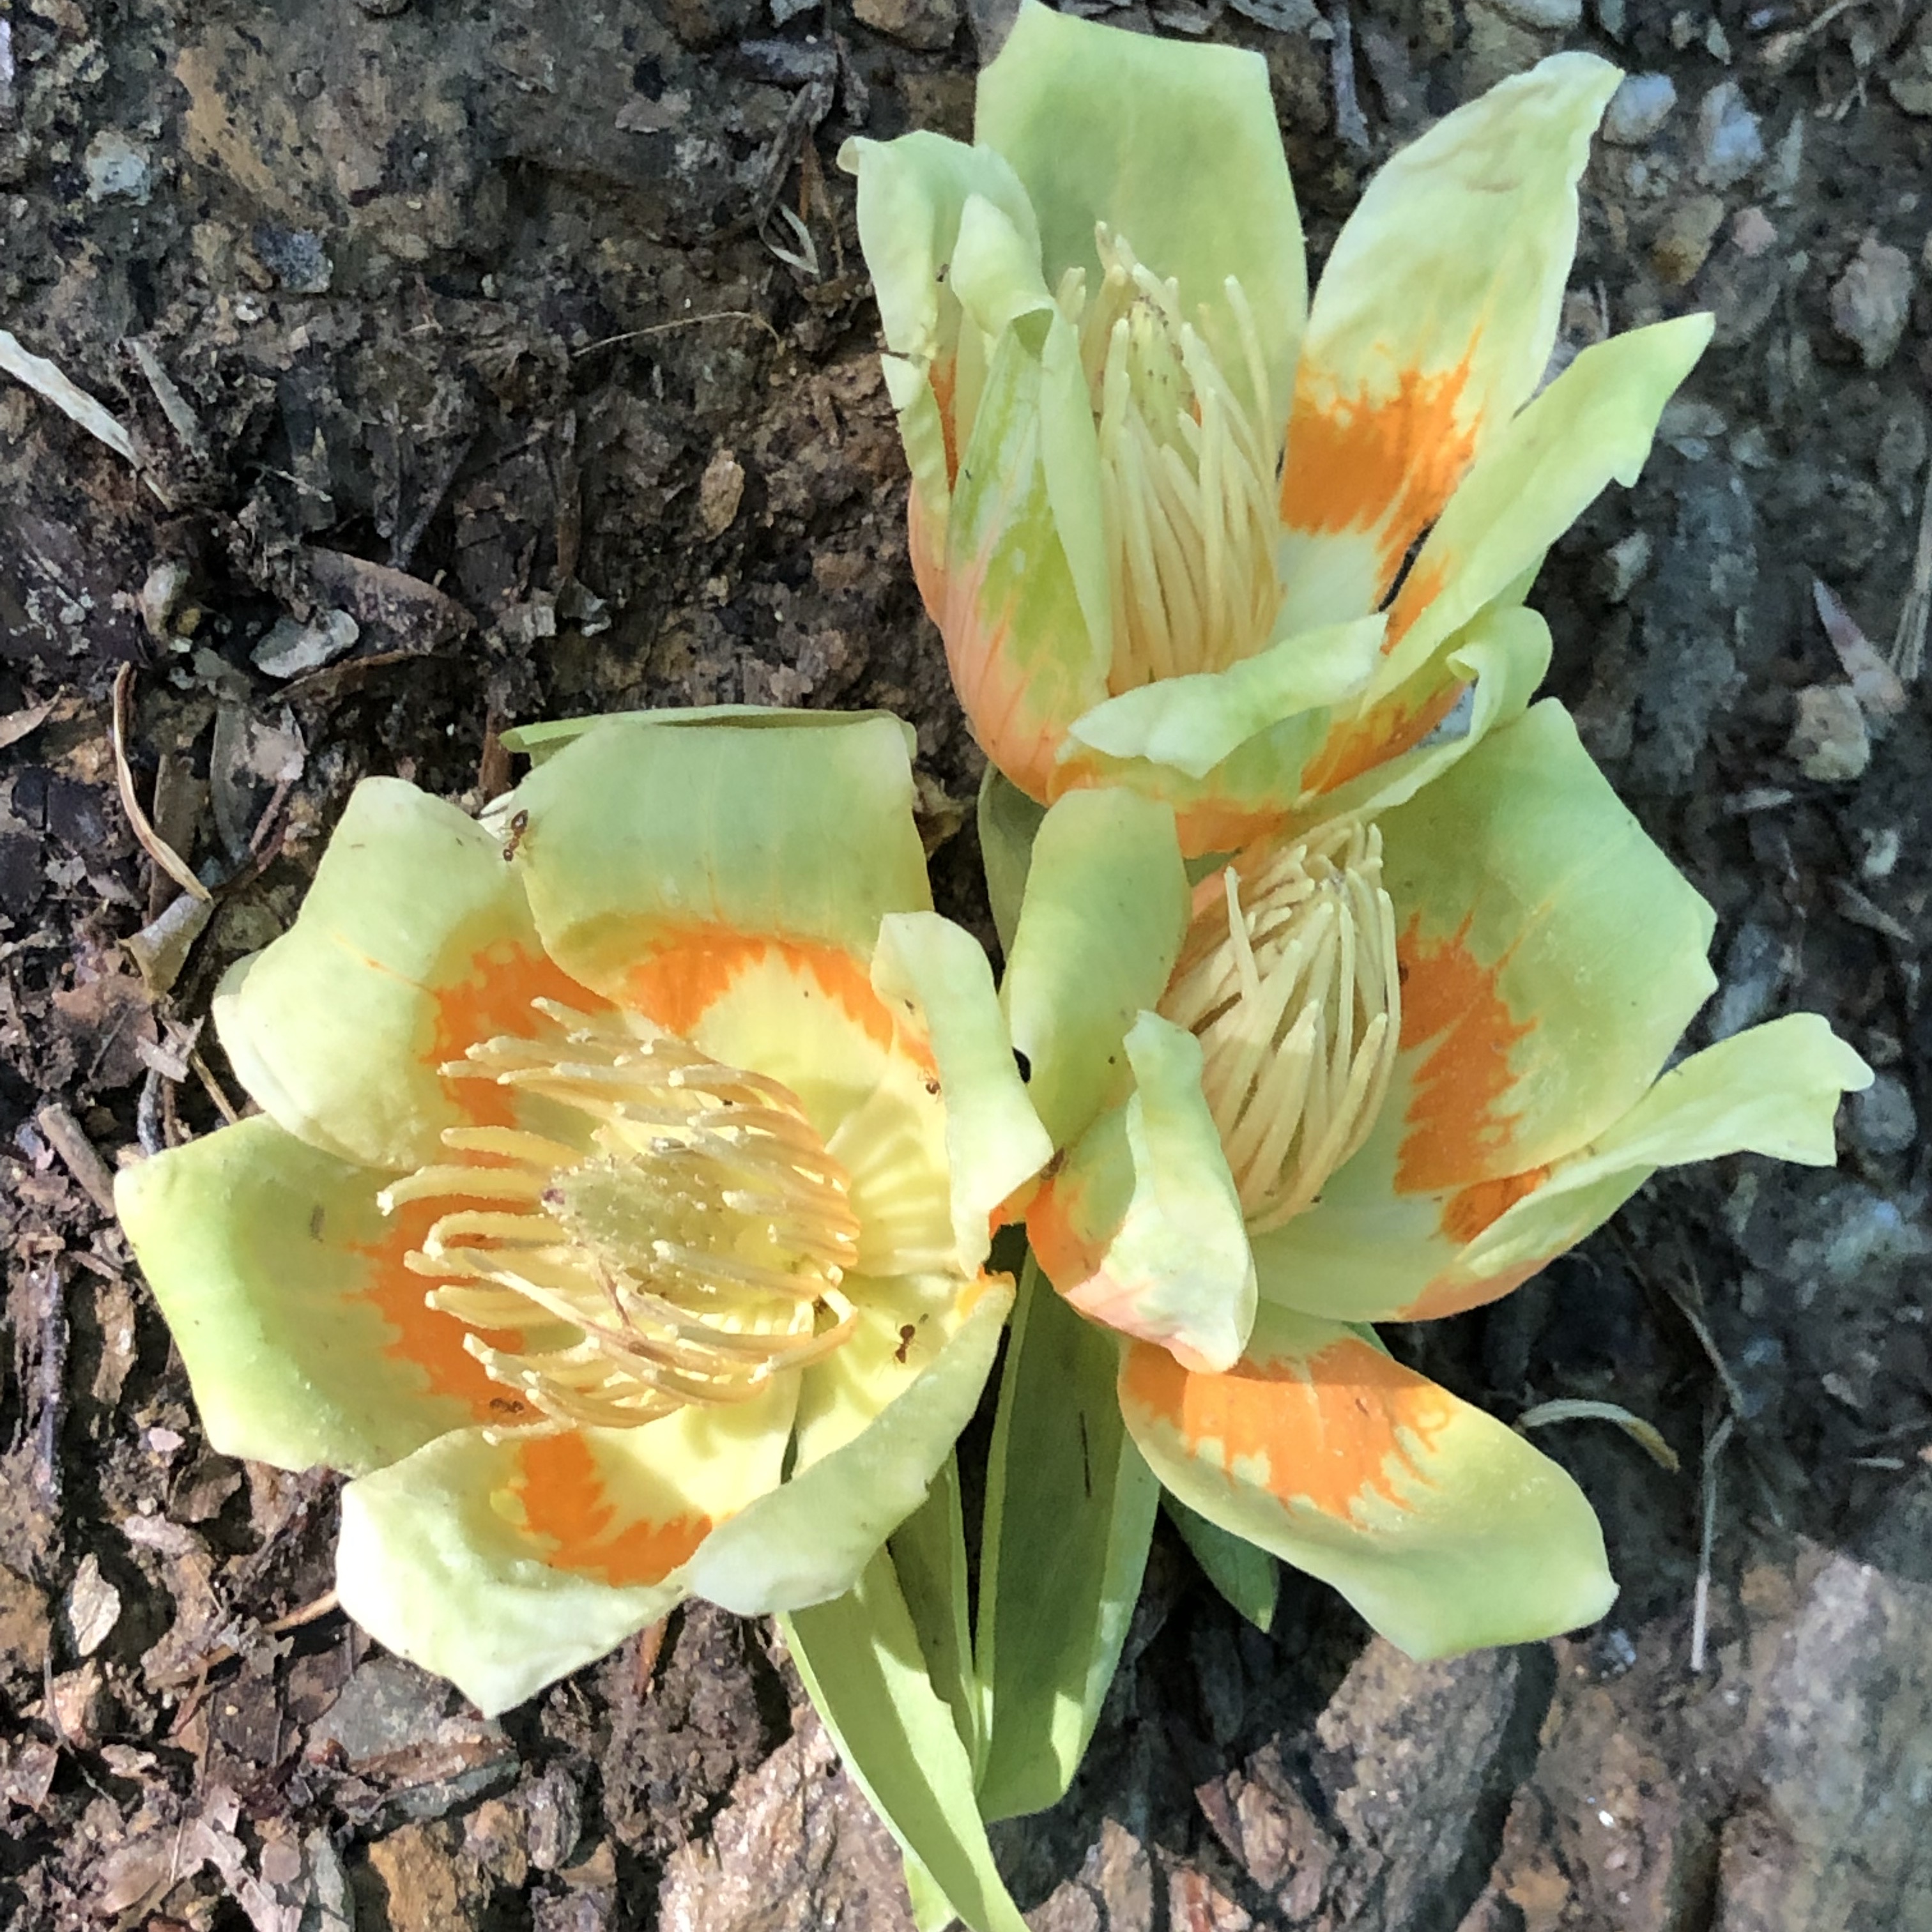 Tulip Poplar flowers in Reston, Herndon, and Great Falls, VA